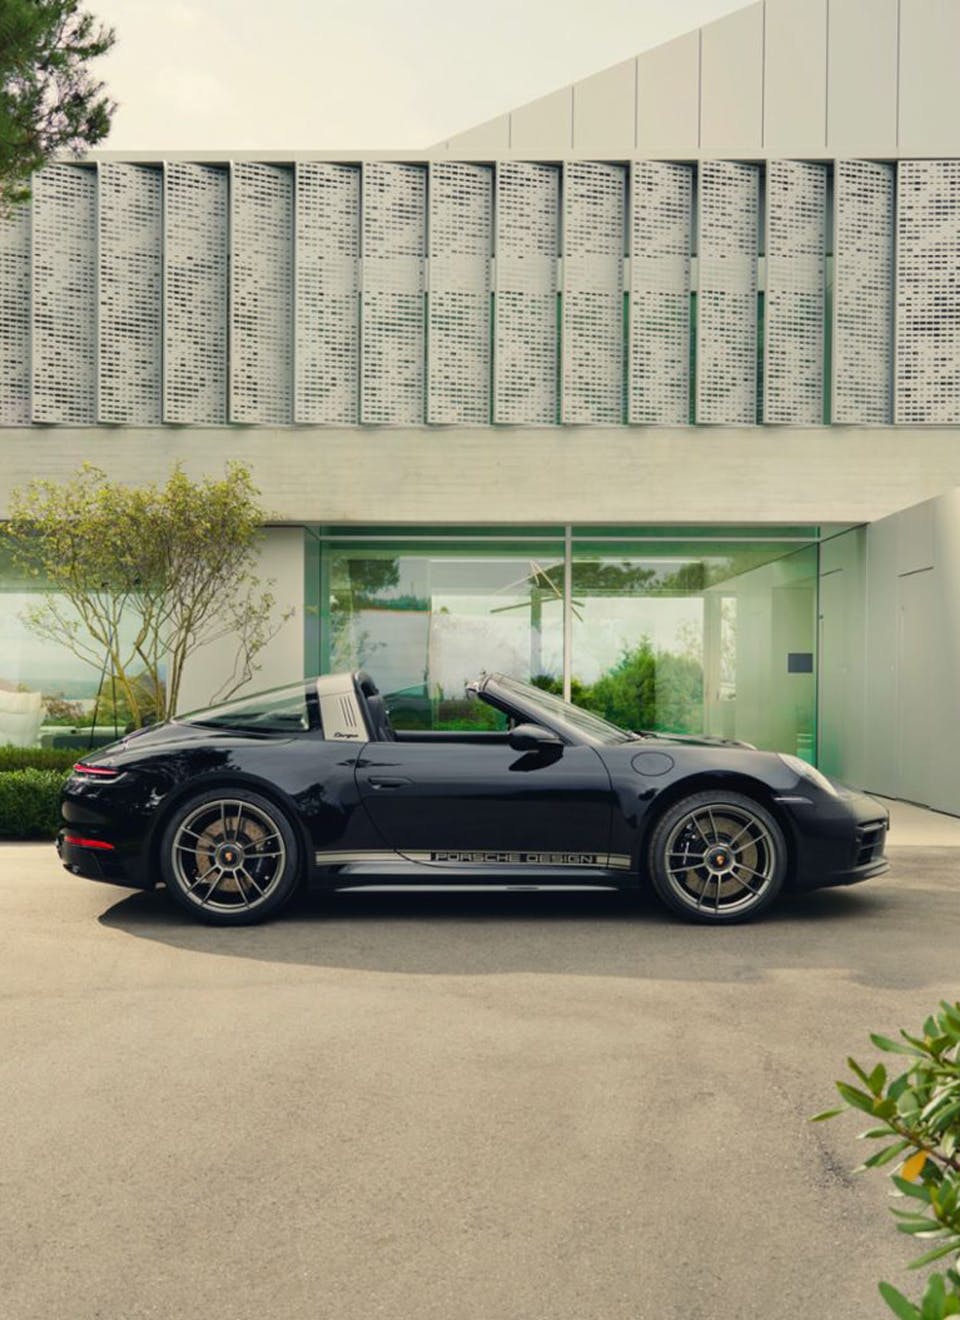 Exploring Porsche Design's most revolutionary products